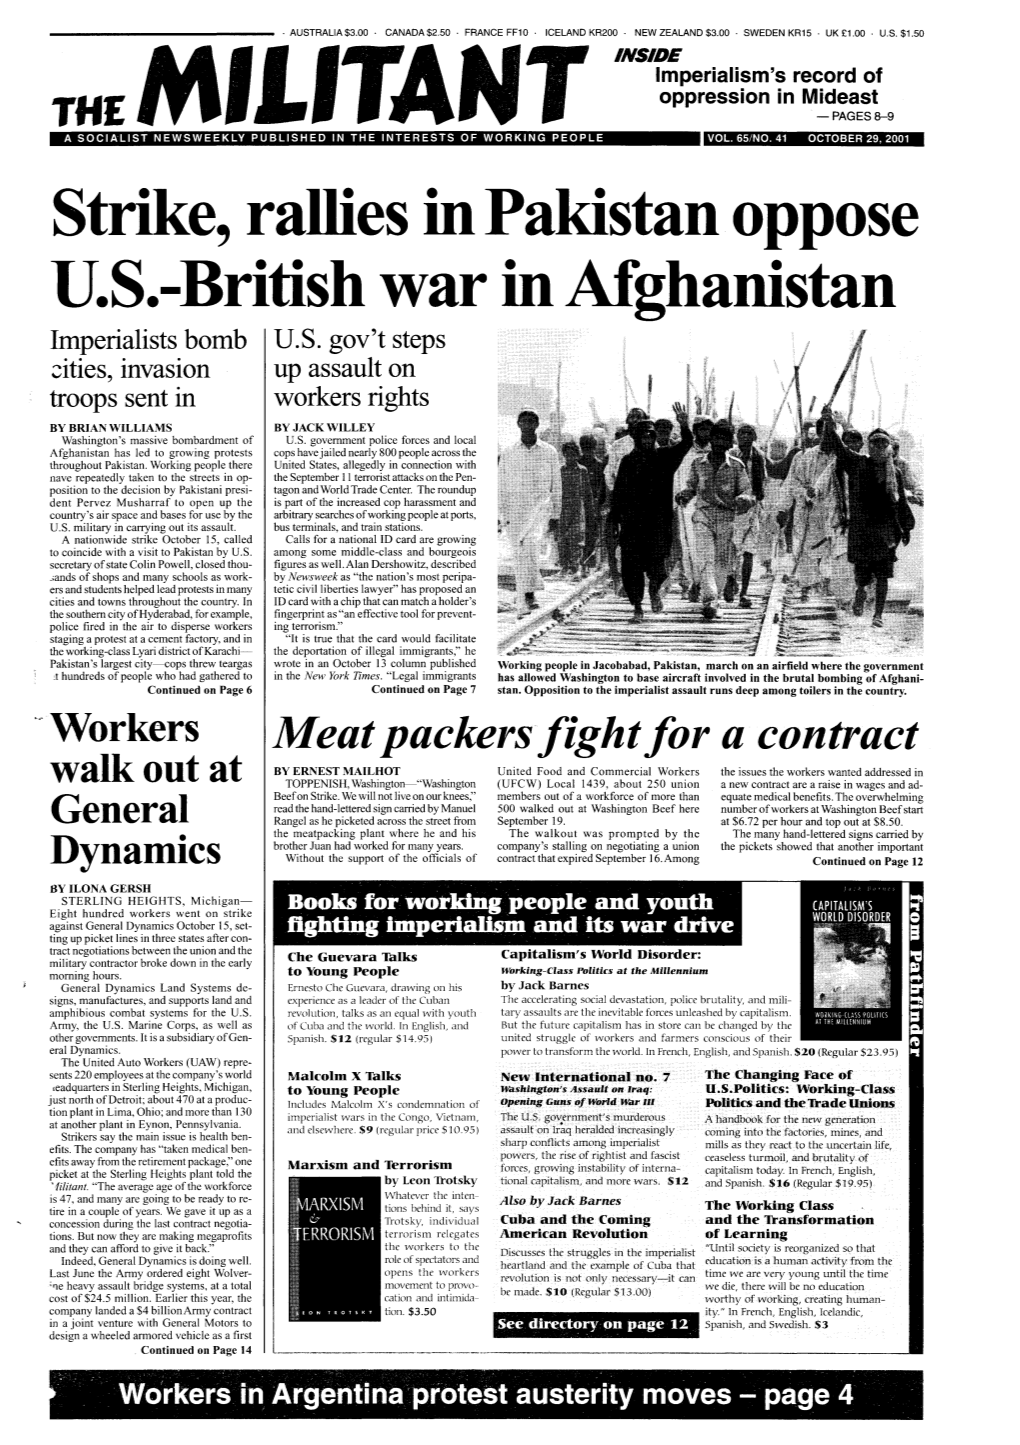 Strike, Rallies in Pakistan Oppose US-British War In